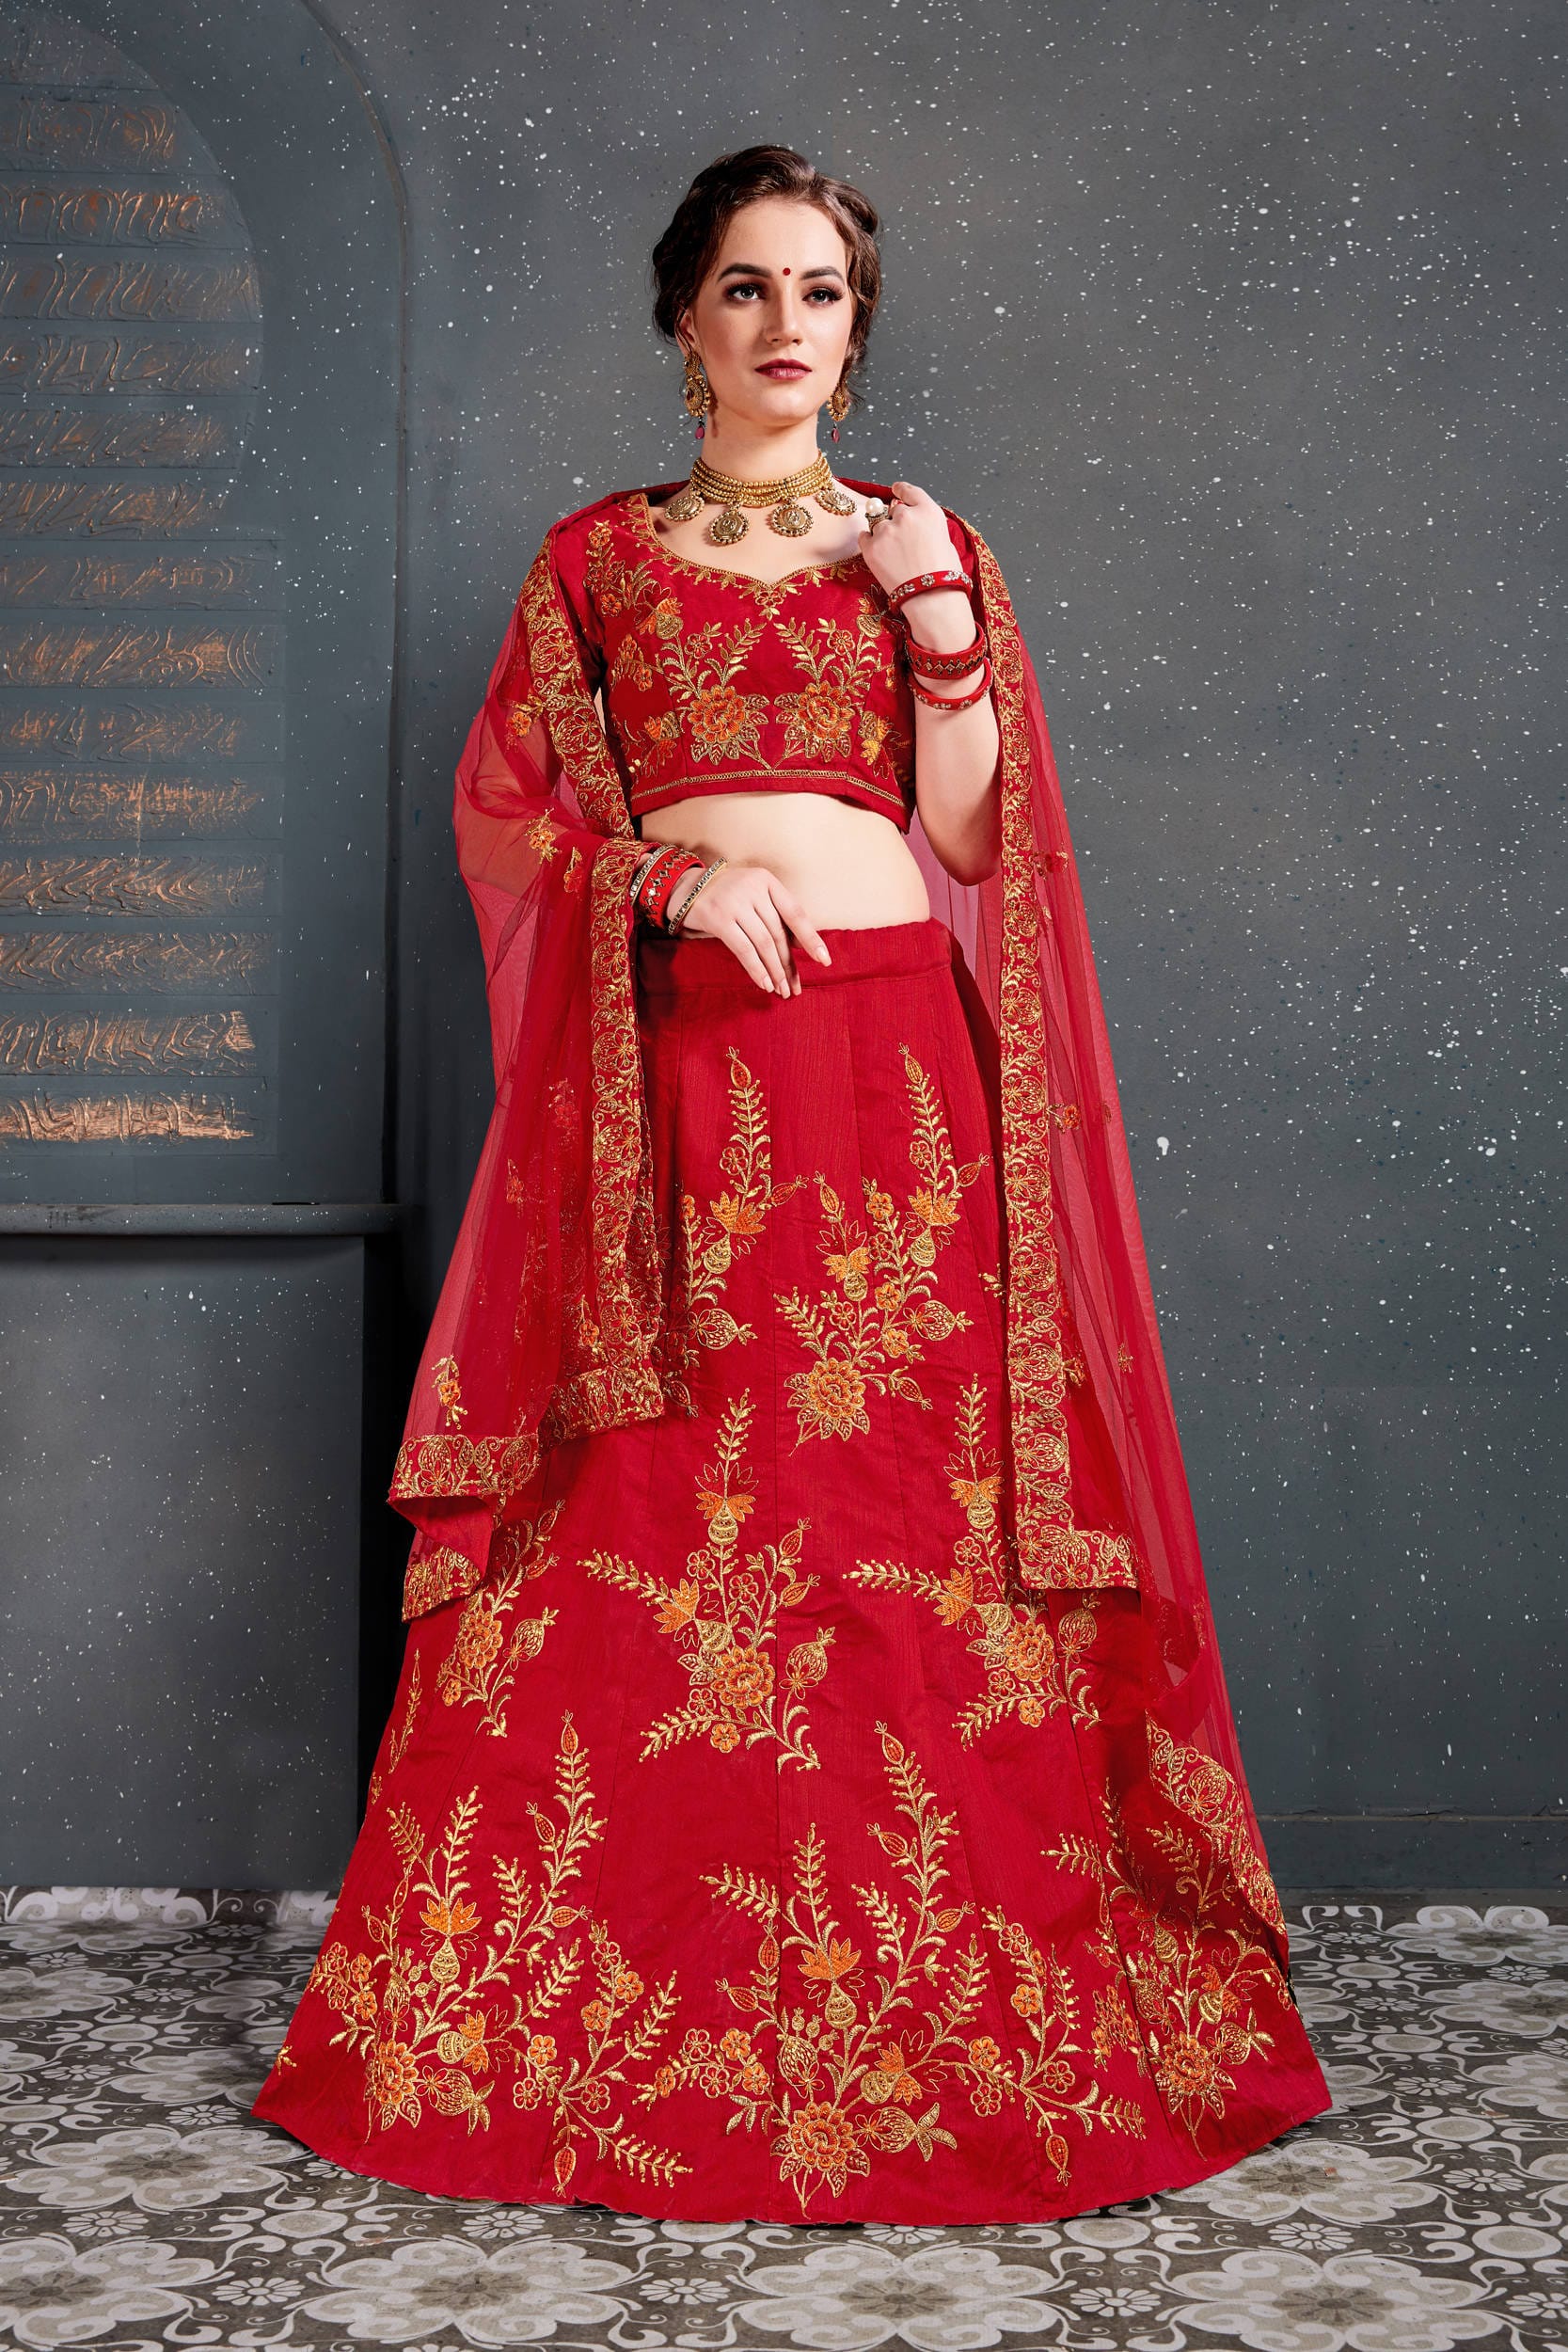 Exquisite Red Thread & Zari Embroidered Lehenga Choli with Diamond Work - Perfect for Party & Wedding Wear in Luxurious Slub Silk